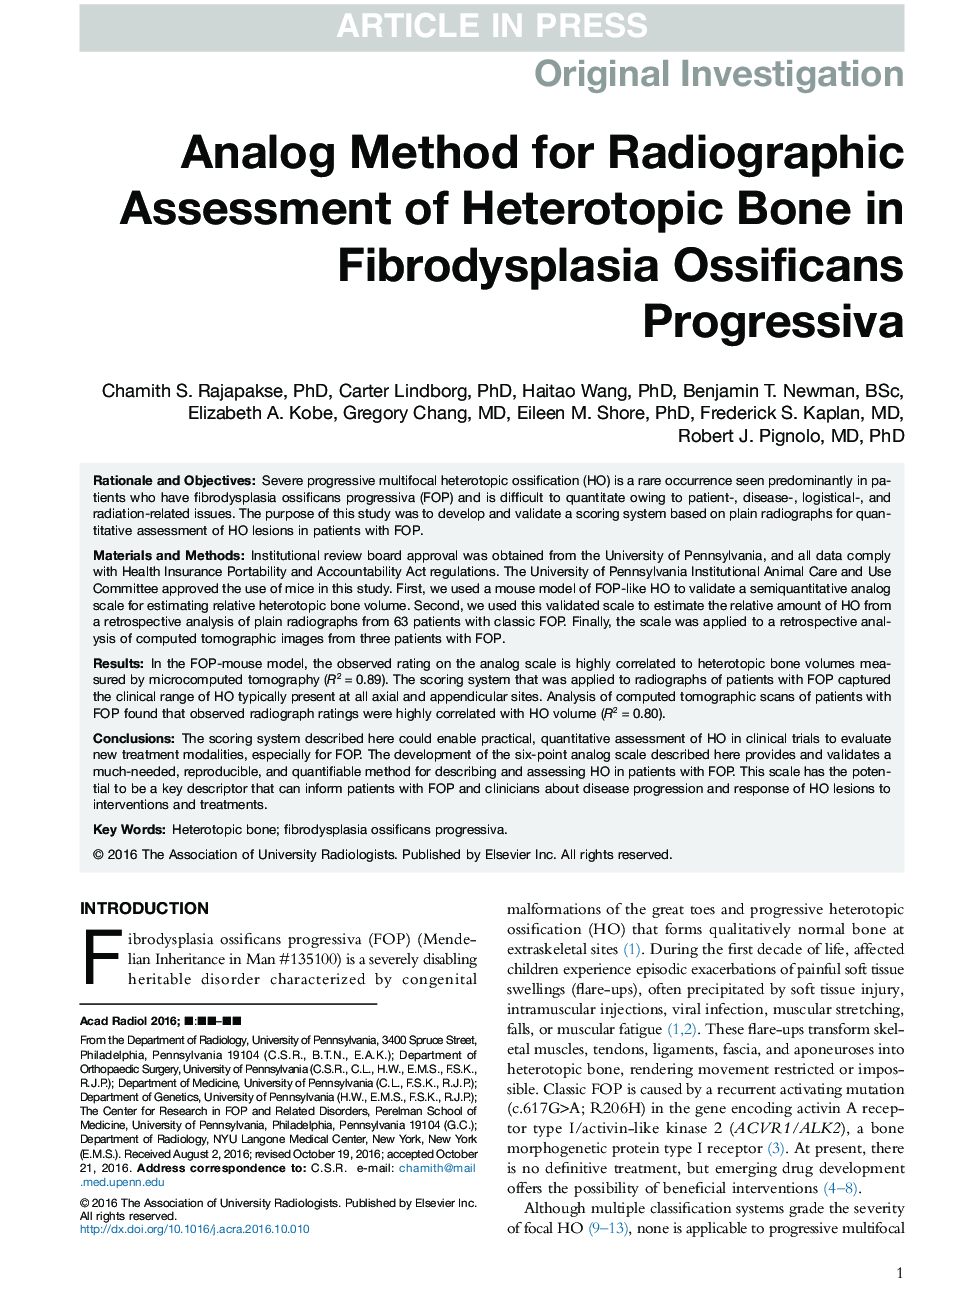 Analog Method for Radiographic Assessment of Heterotopic Bone in Fibrodysplasia Ossificans Progressiva